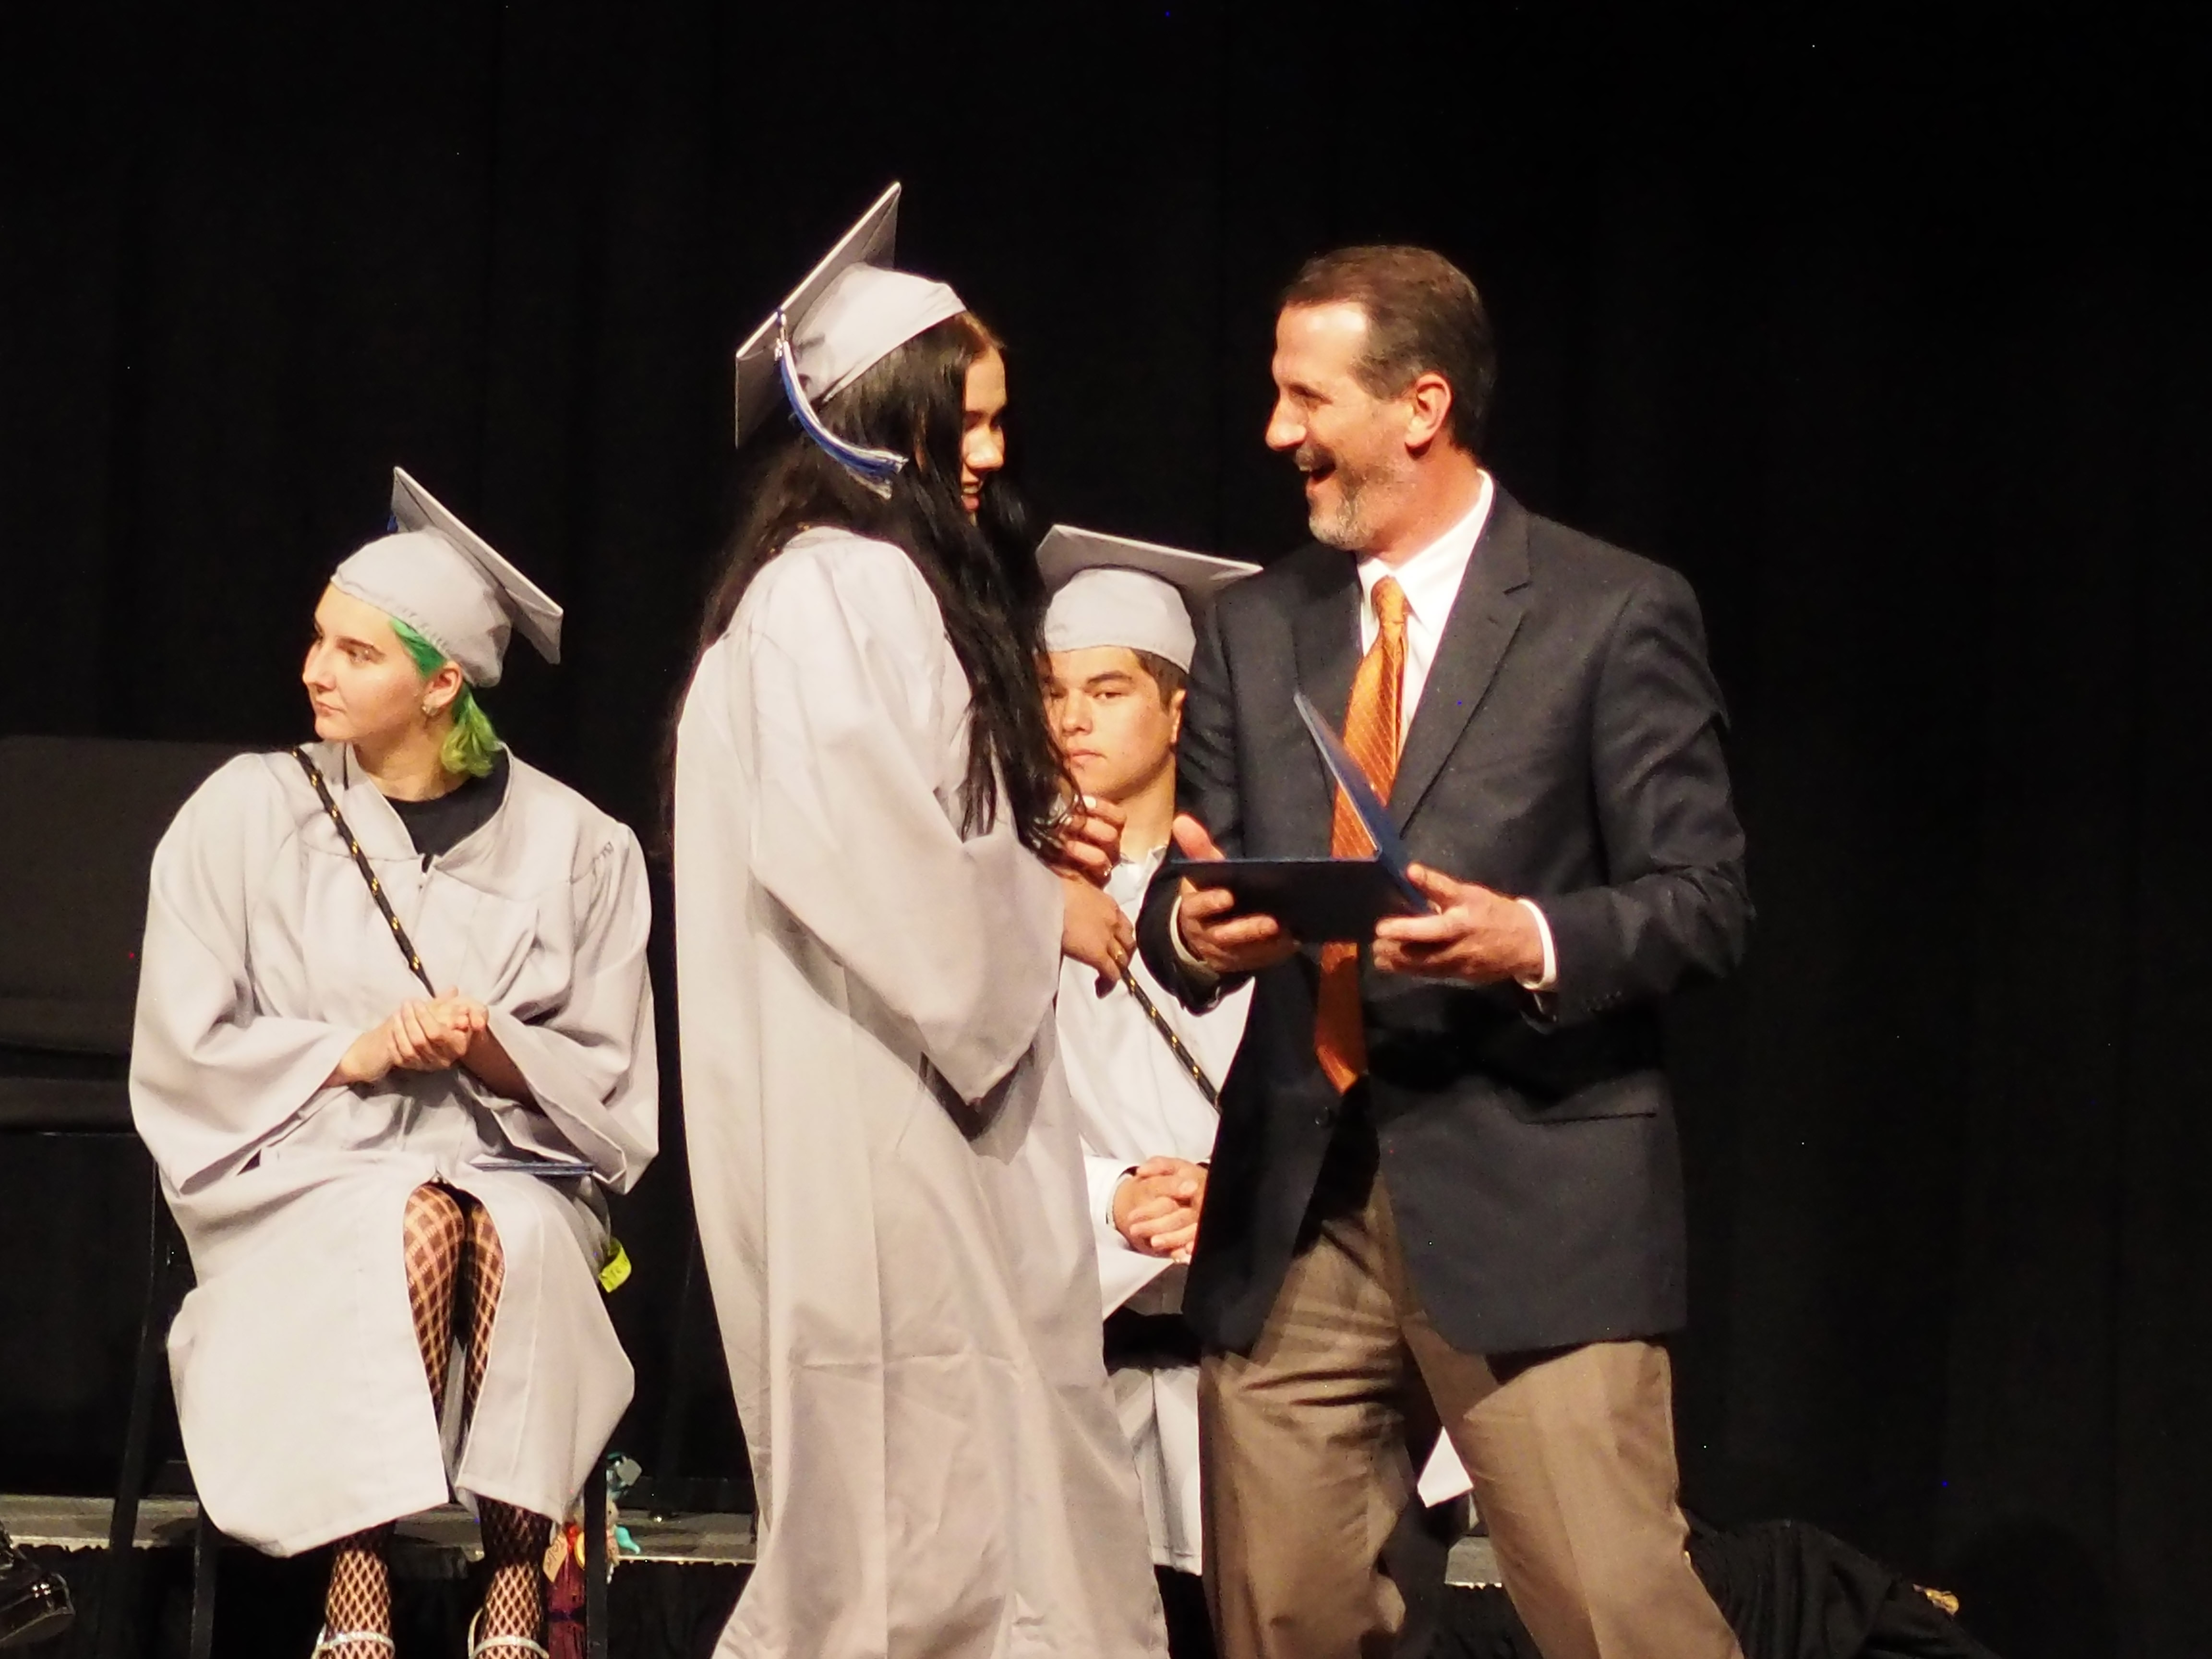 The Polaris principal presents a diploma to a graduate. 